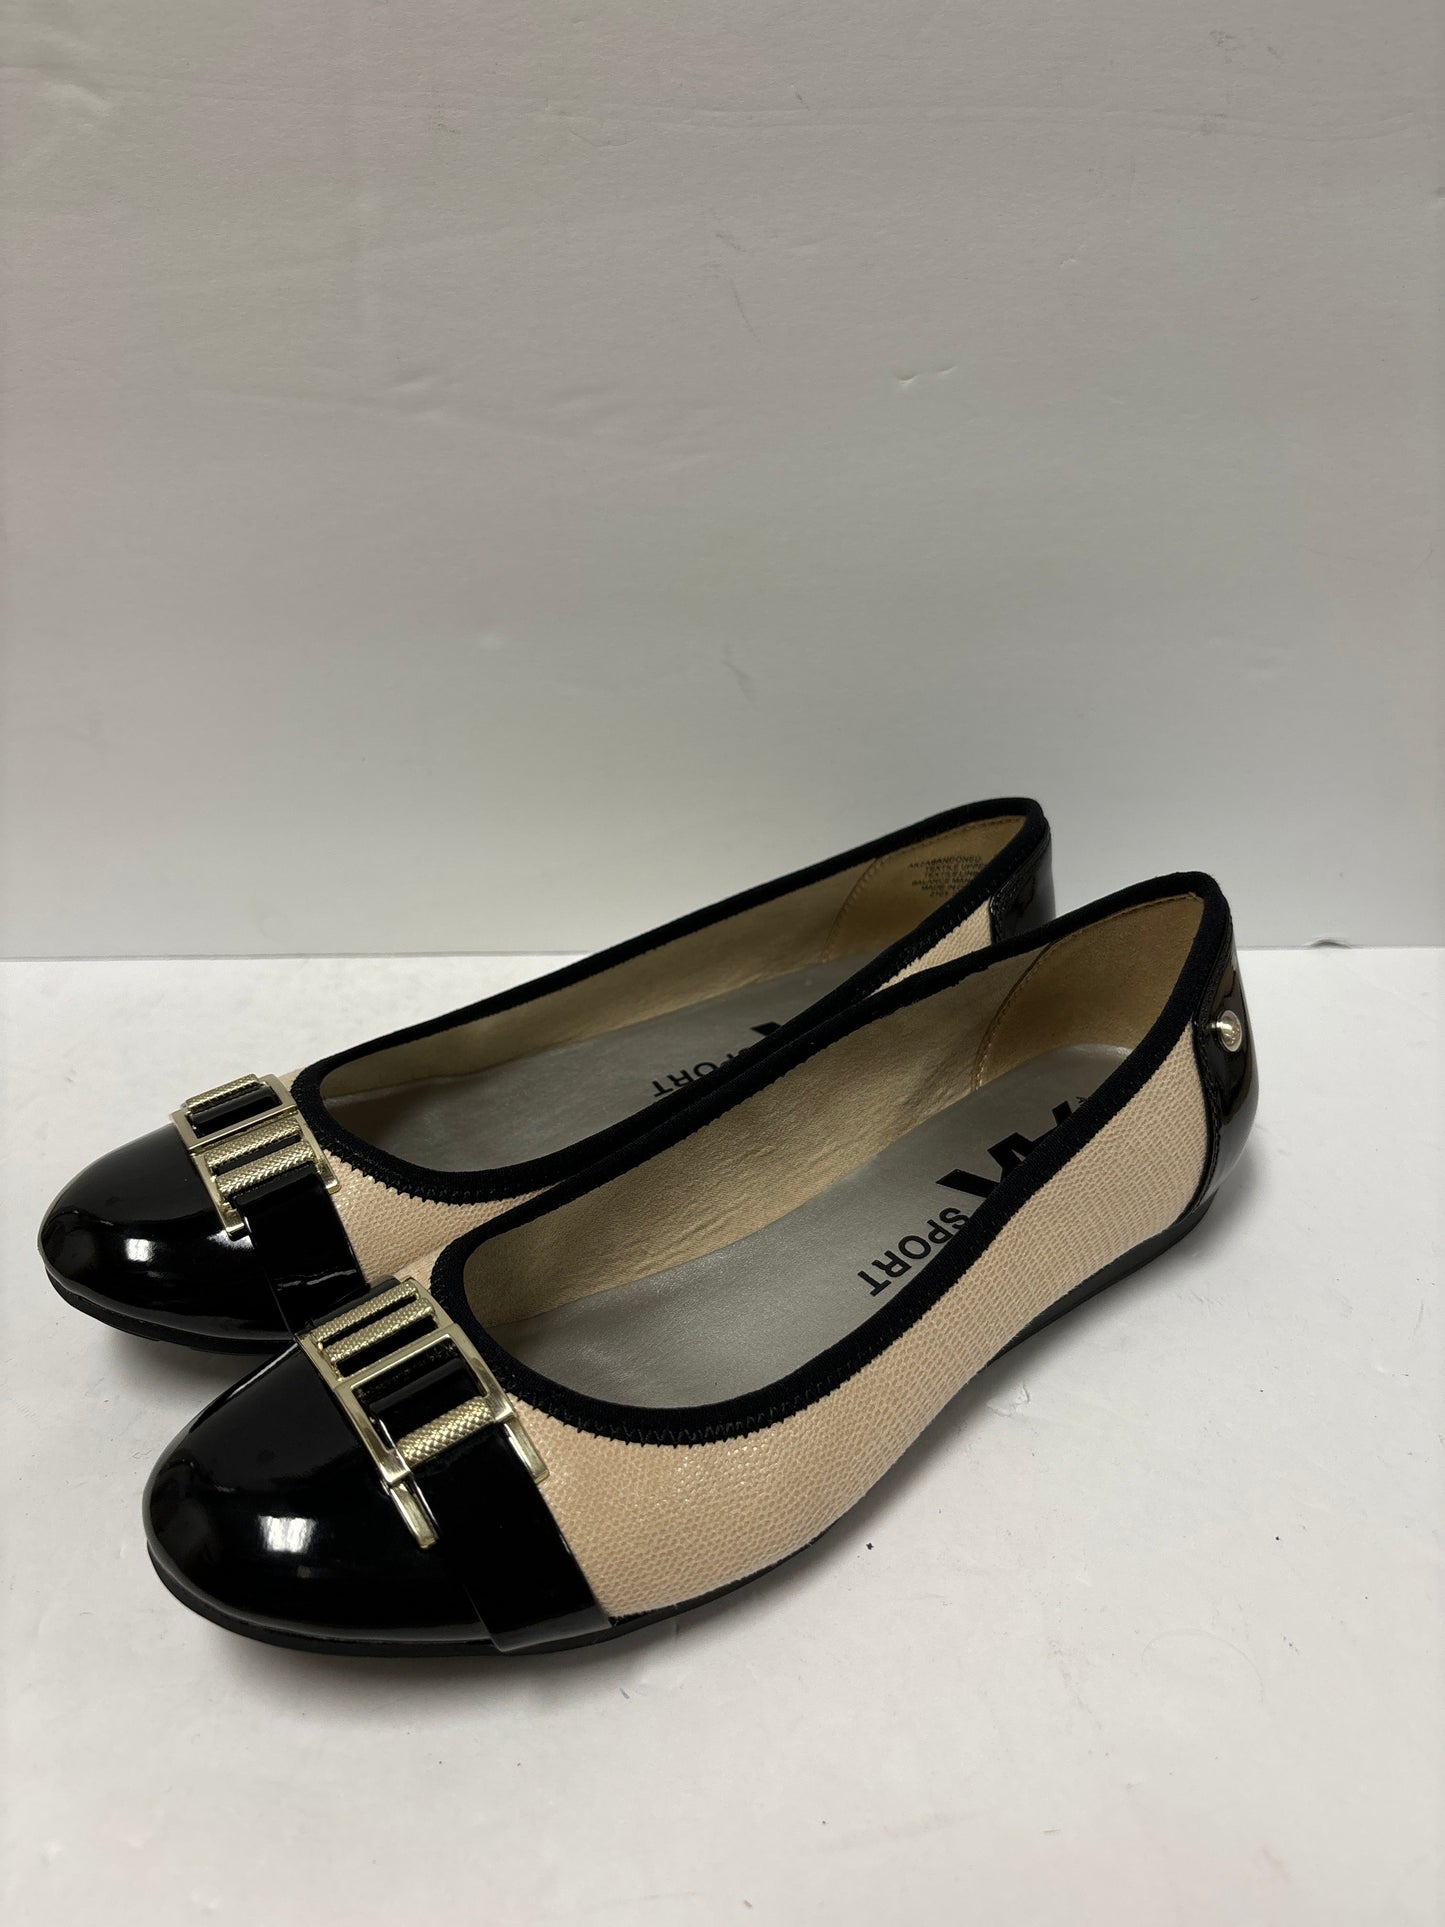 Black & Cream Shoes Flats Anne Klein, Size 7.5